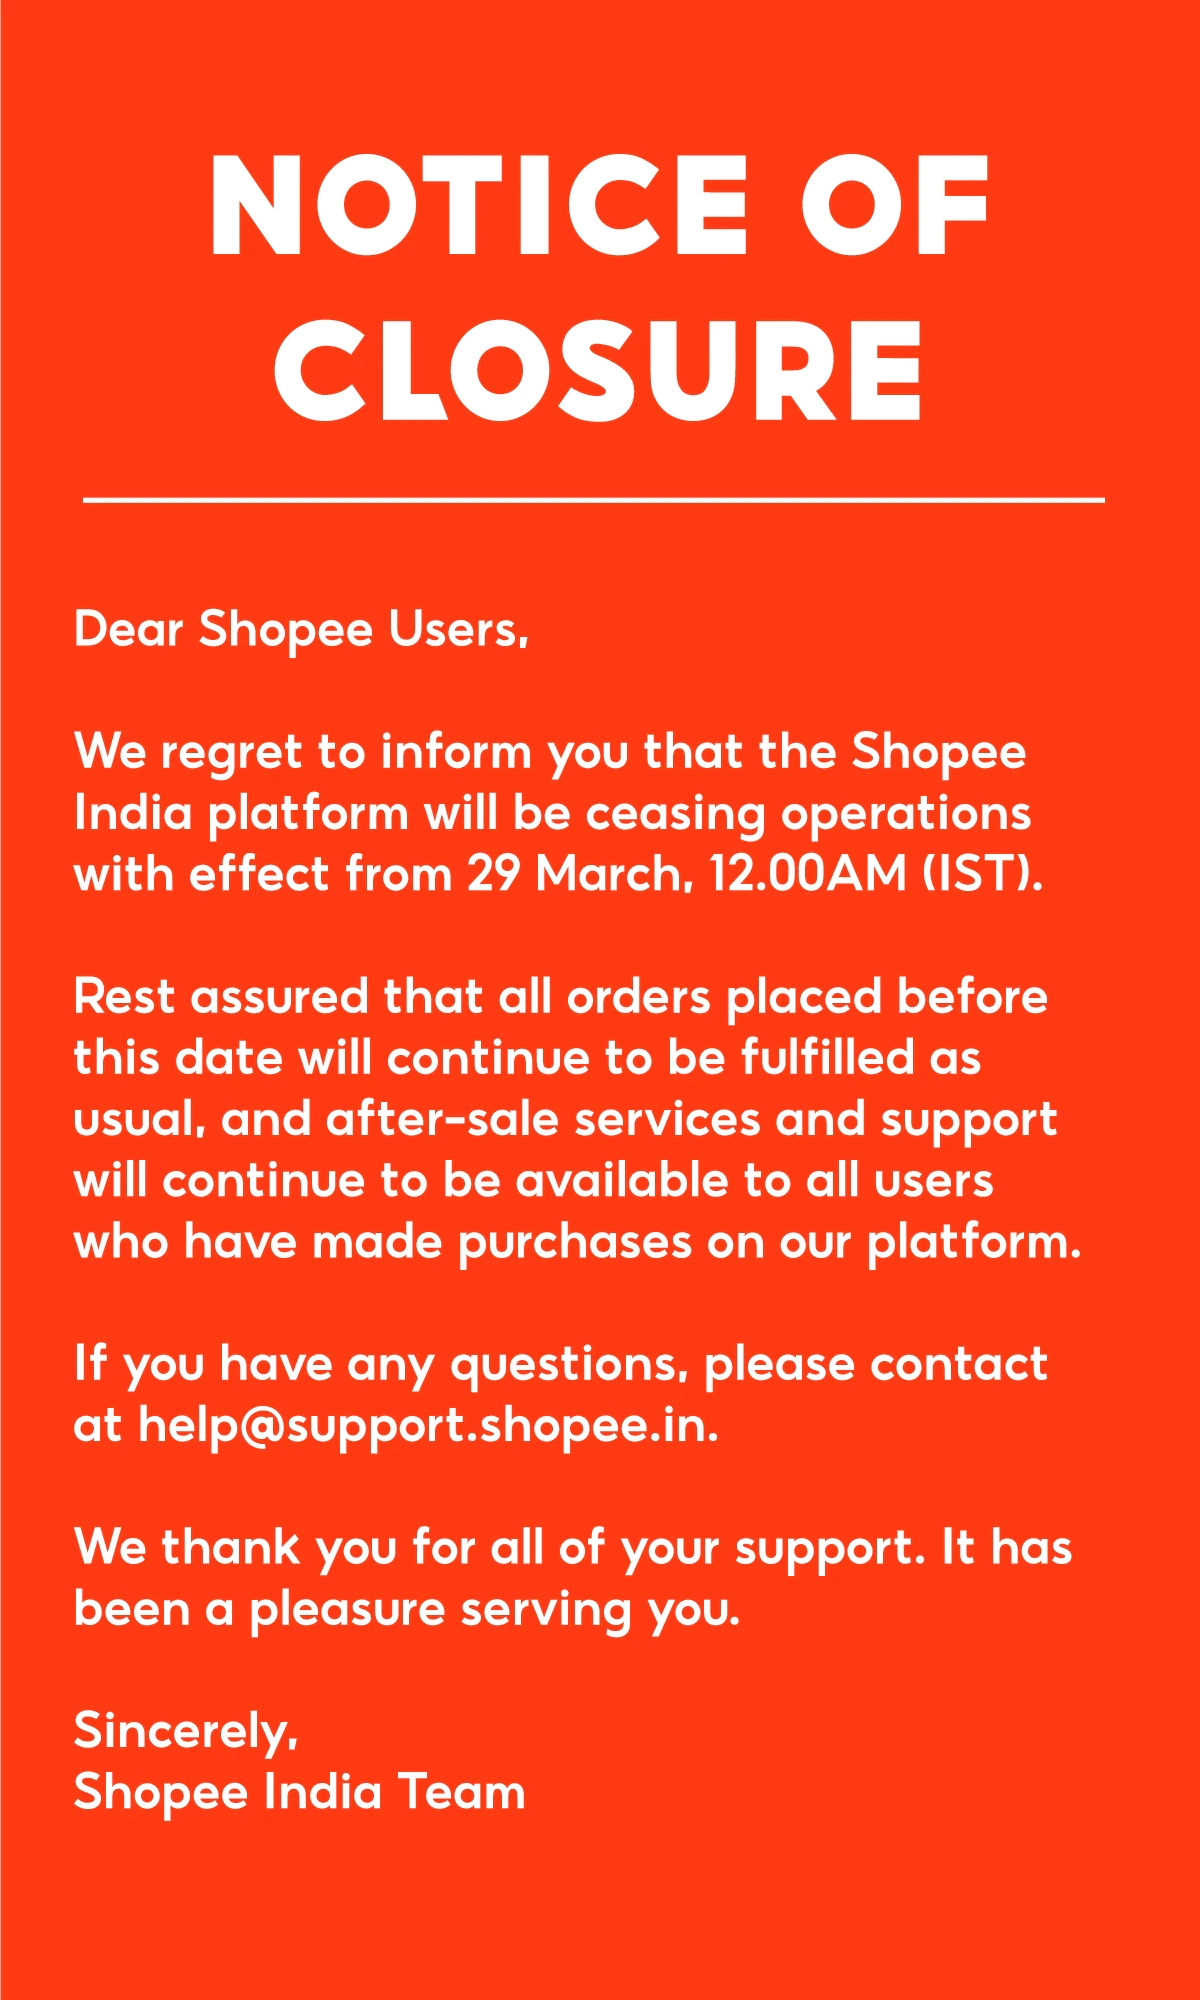  Popular e-commerce platform Shopee shuts operations in India 